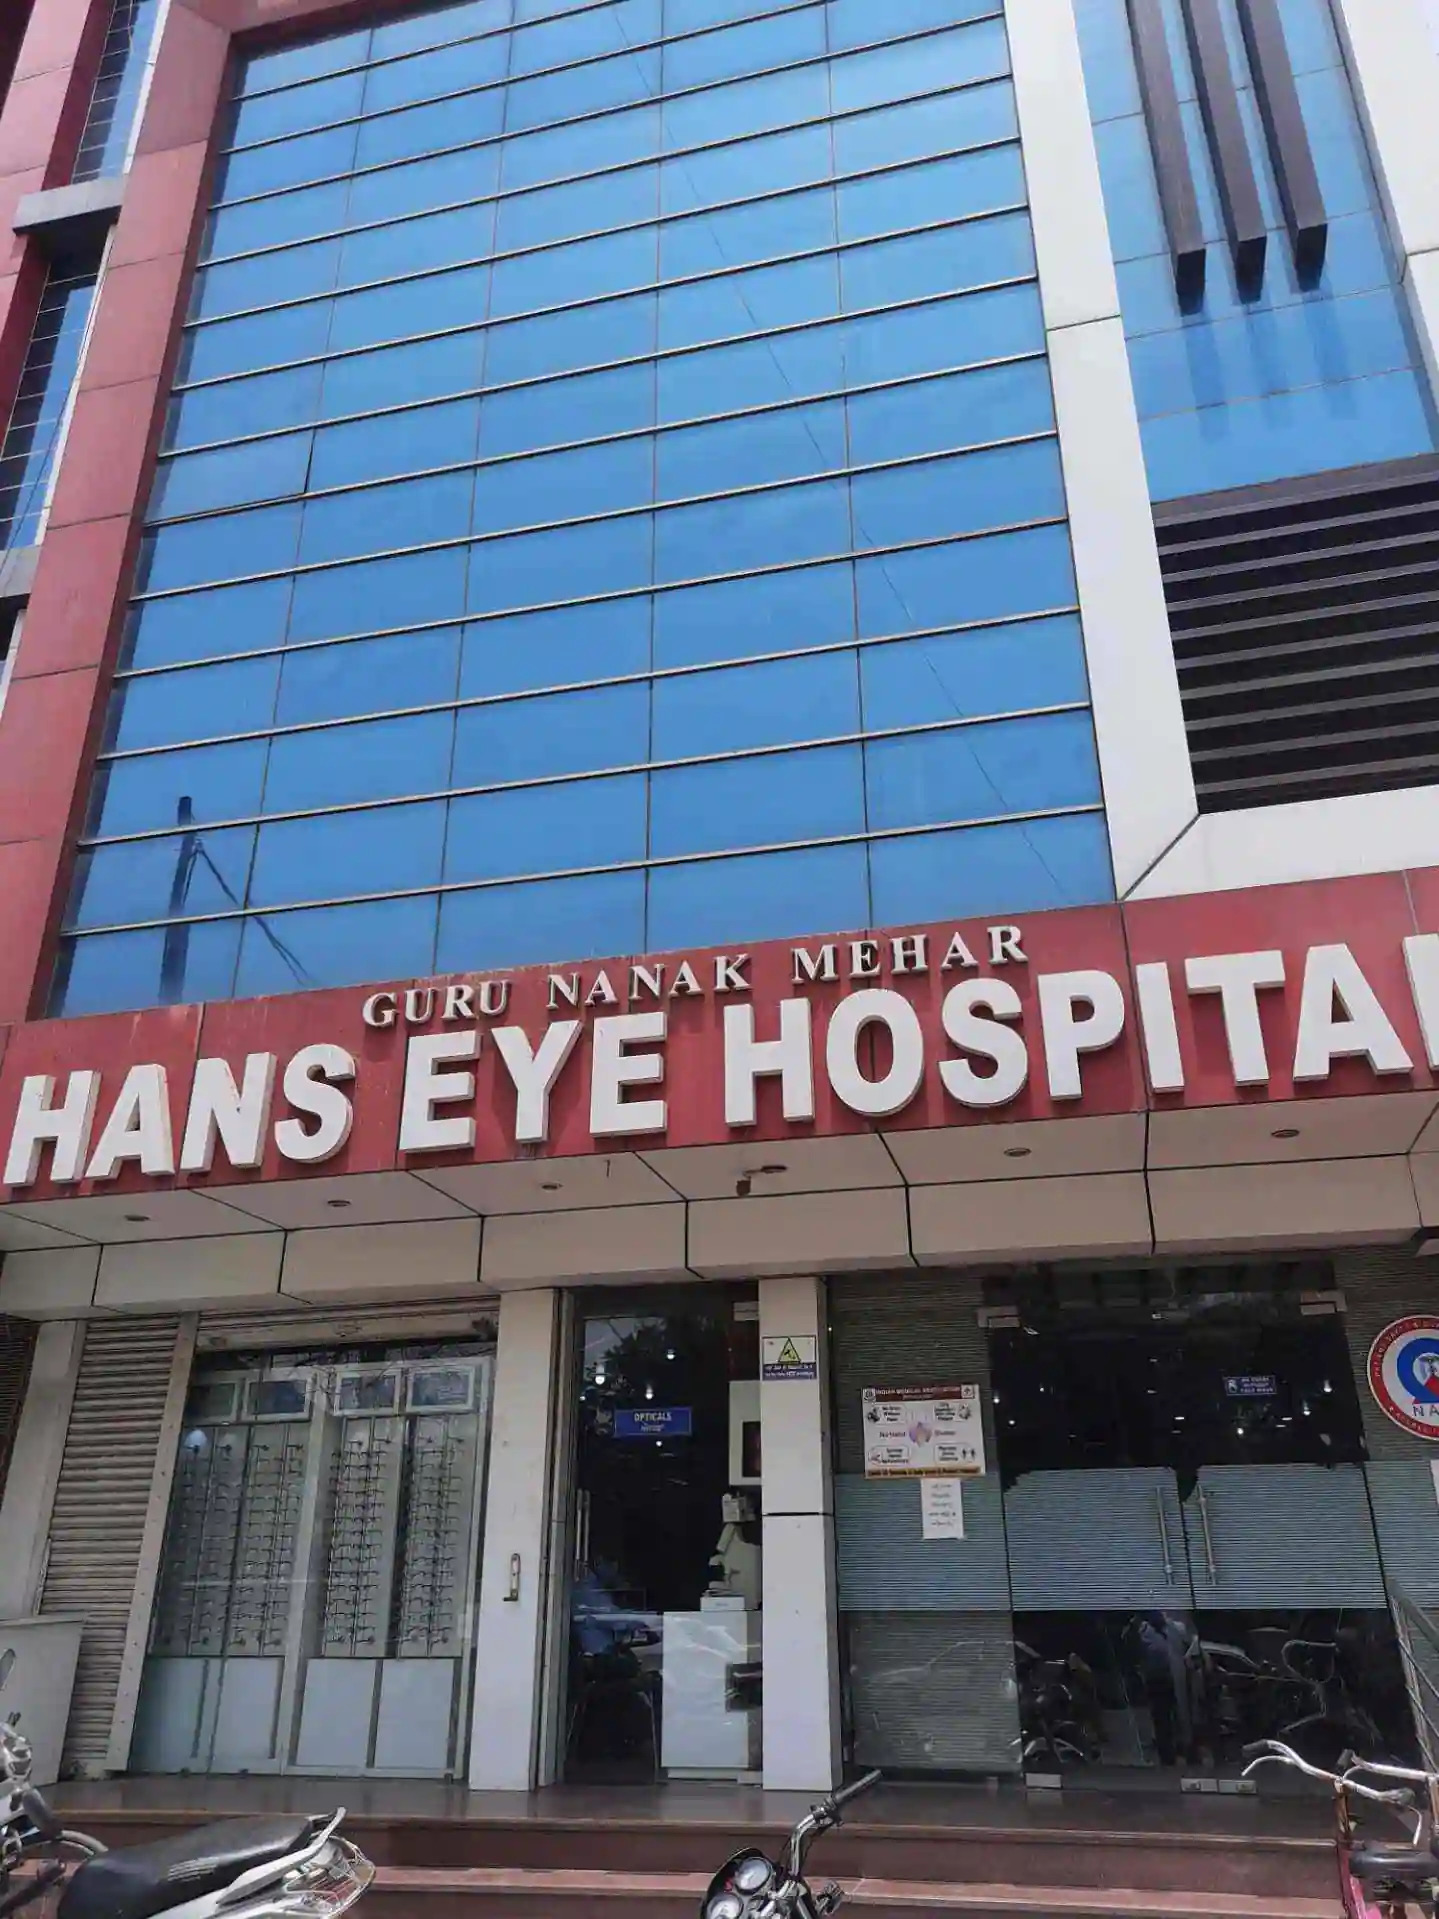 Hans Eye Hospital & Lasik Laser Centre